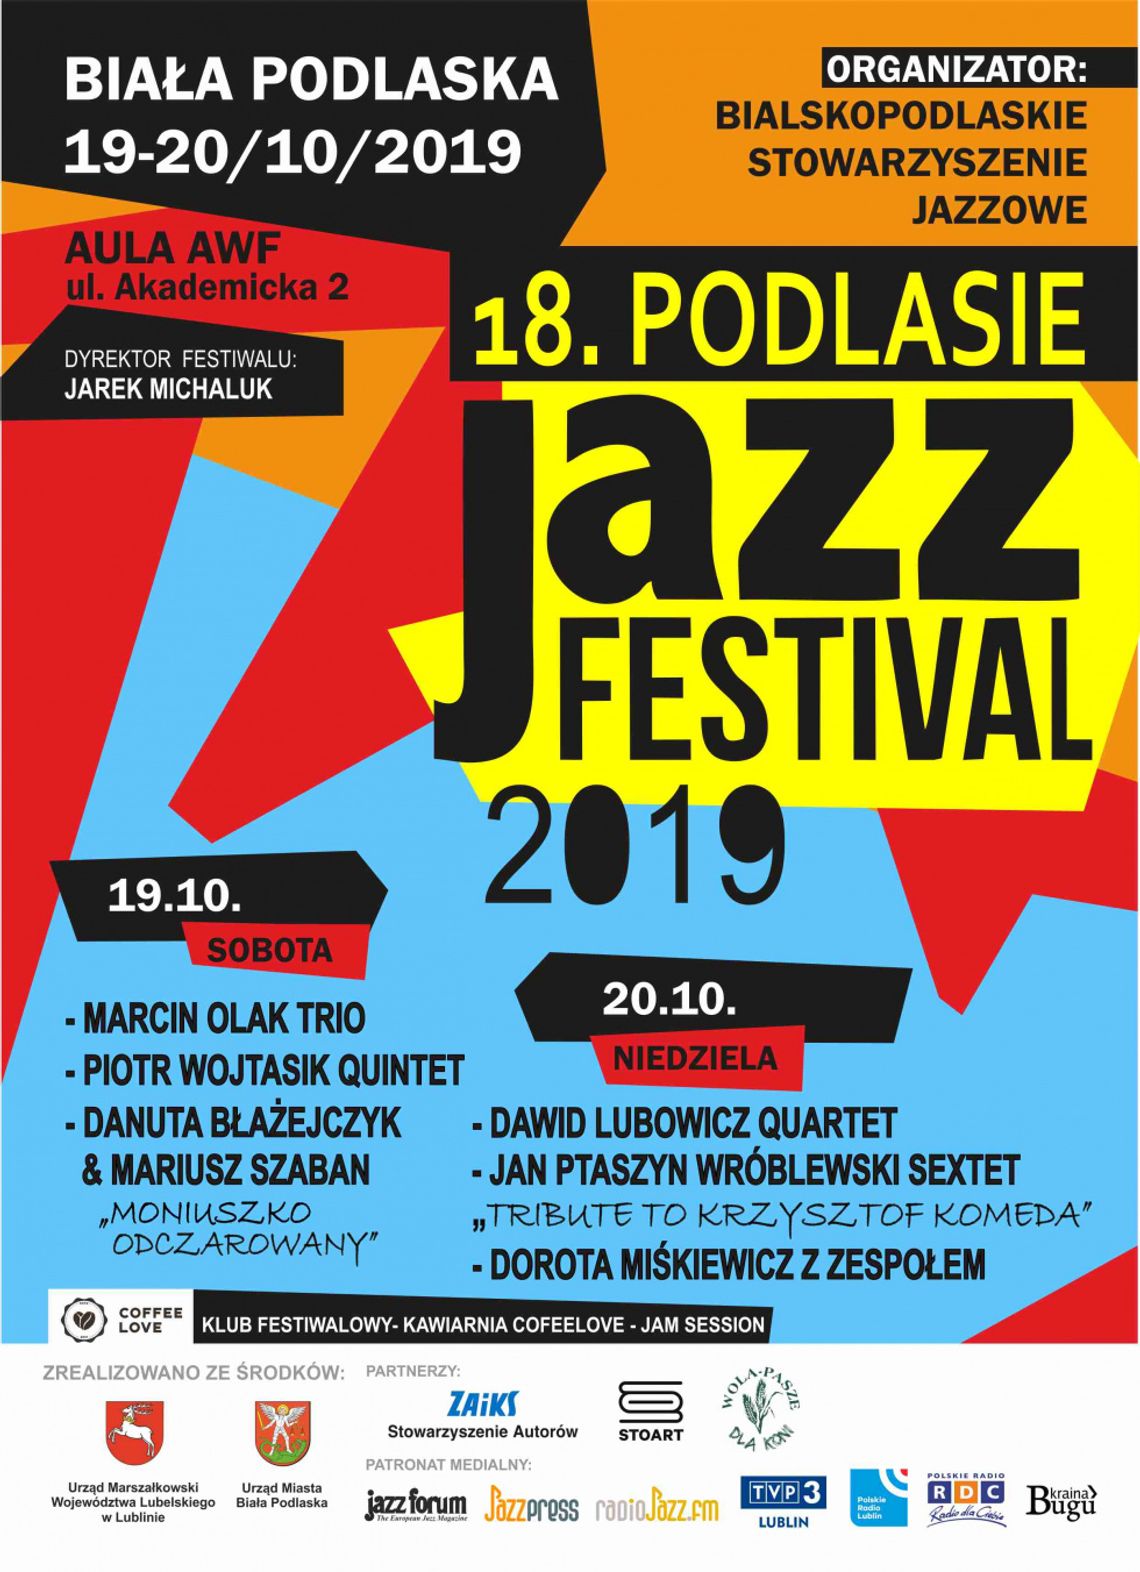 BIAŁA PODLASKA: Podlasie Jazz Festival po raz 18!